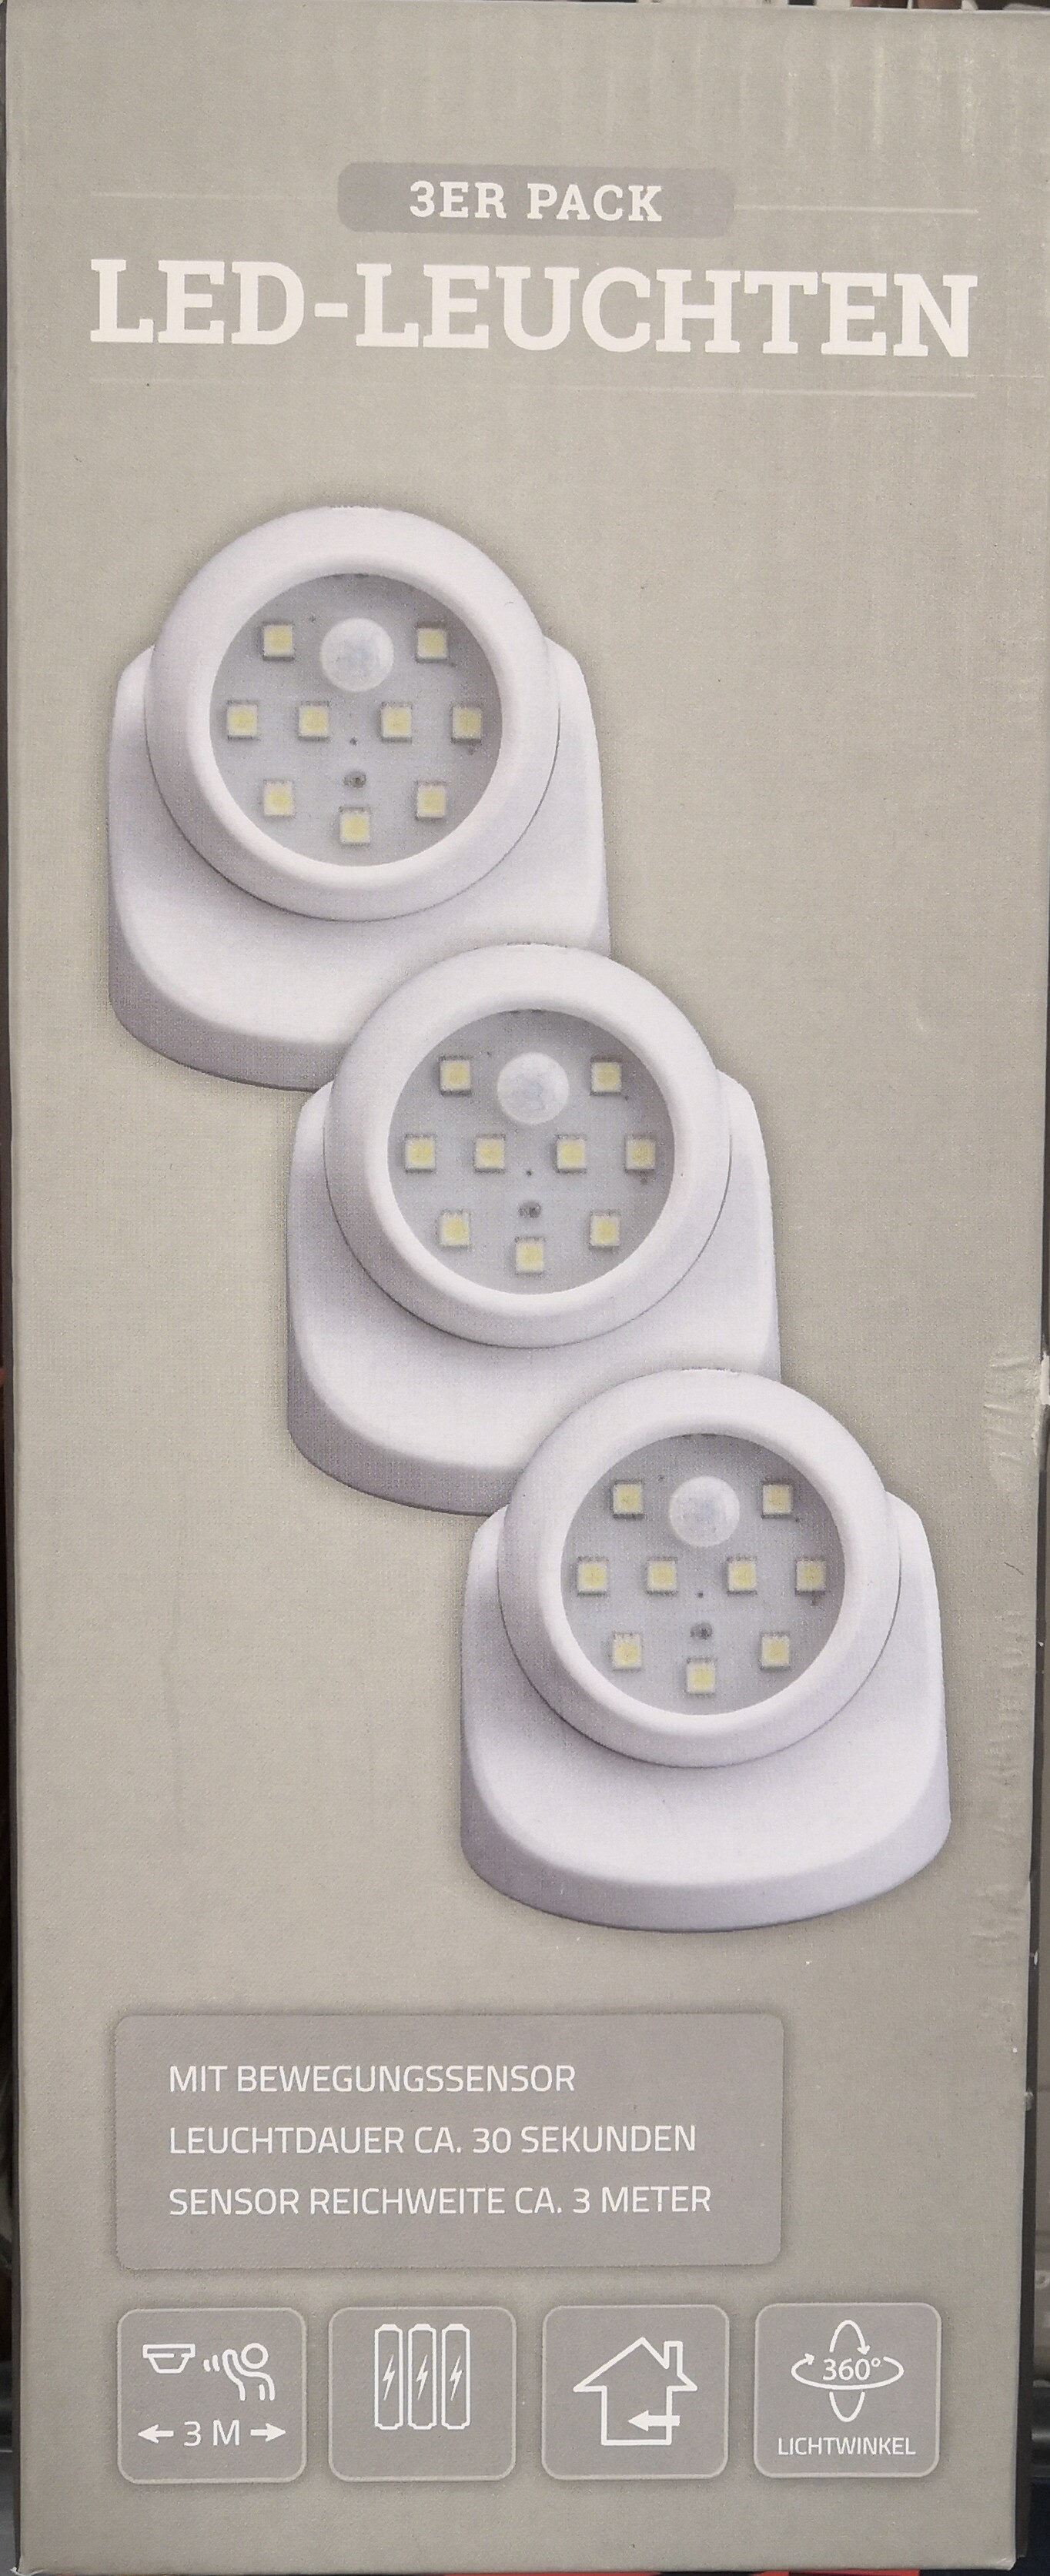 3er-Pack LED-Leuchten - Product - de